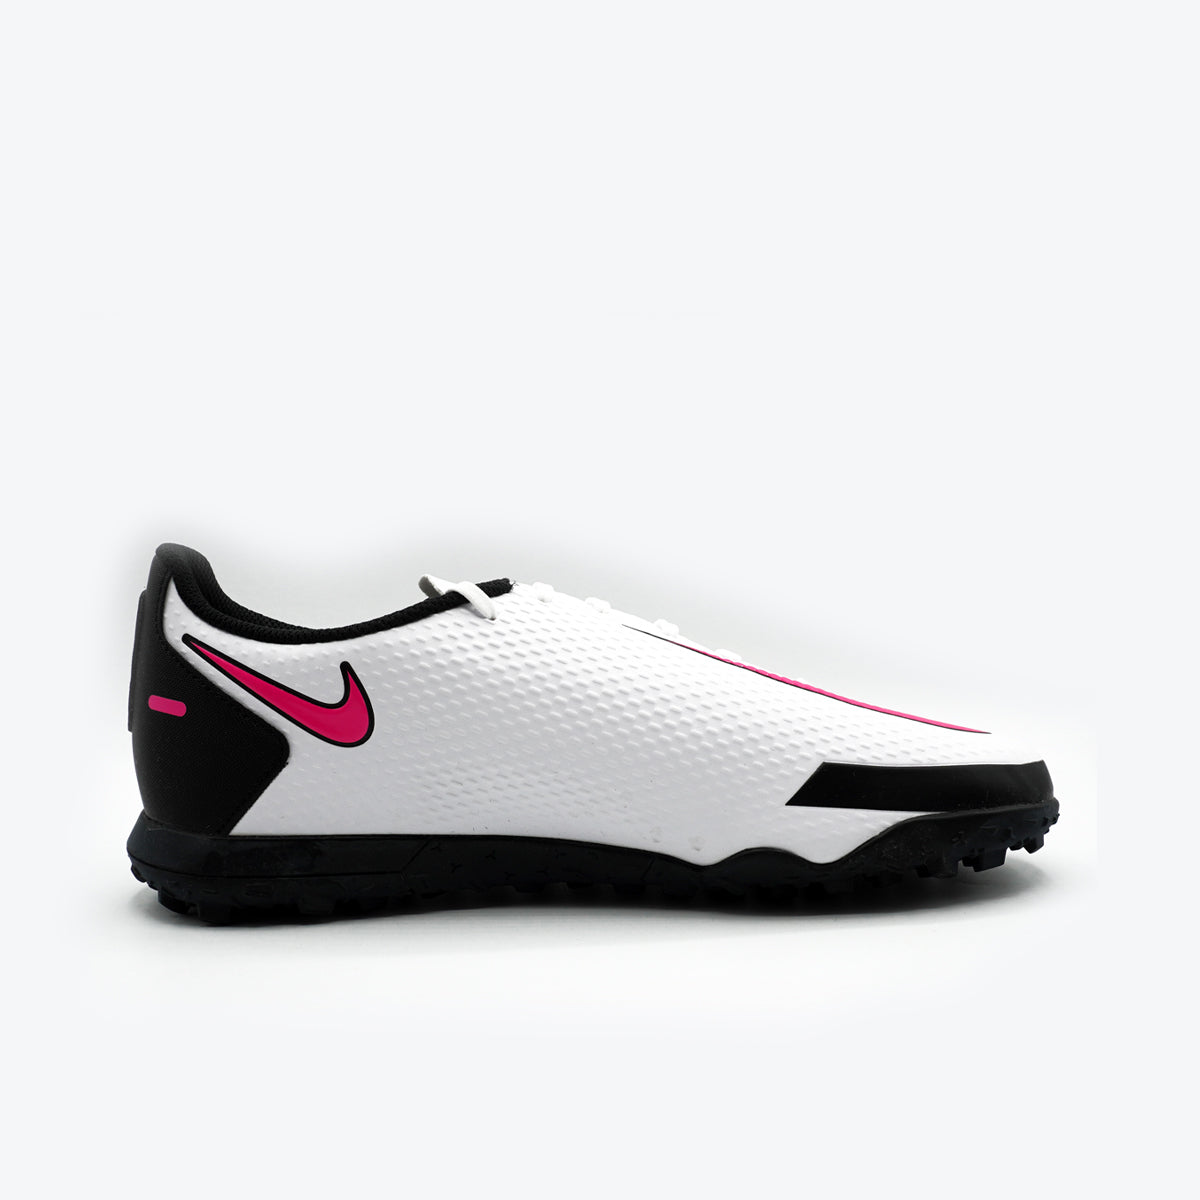 Nike Phantom GT Club TF Football Boots, White/Pink Blast/Black - UK 7